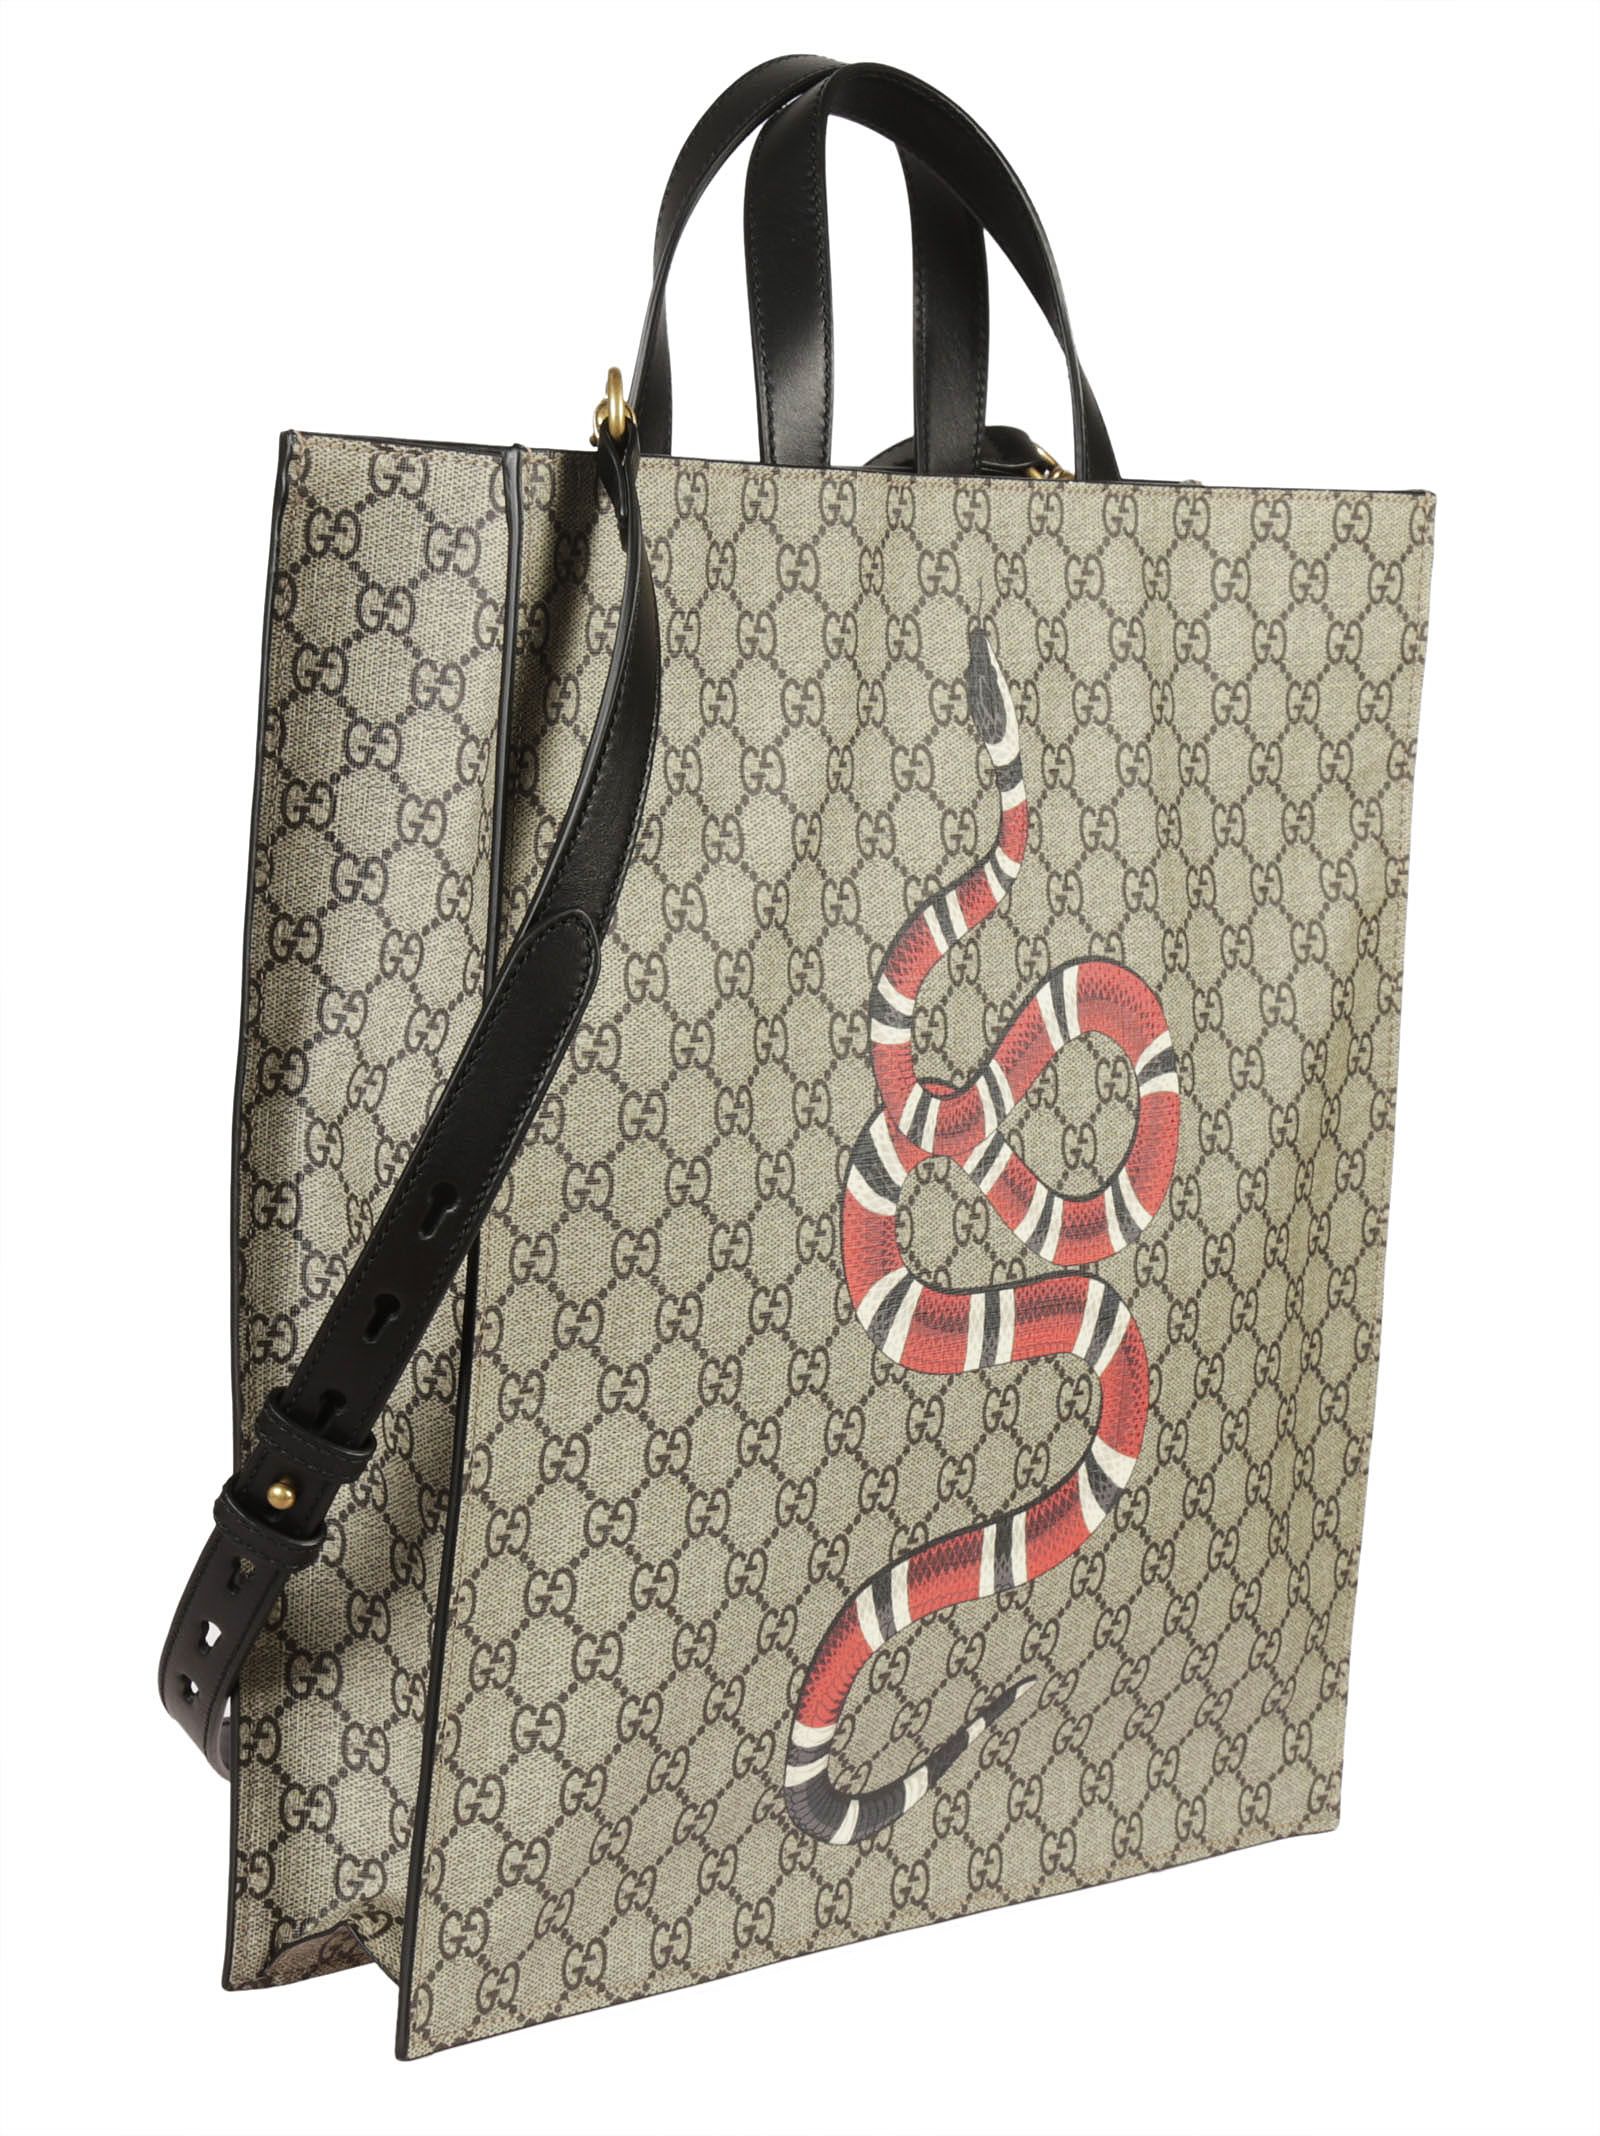 italist | Best price in the market for Gucci Gucci Snake Print GG Supreme Tote - Multicolor ...